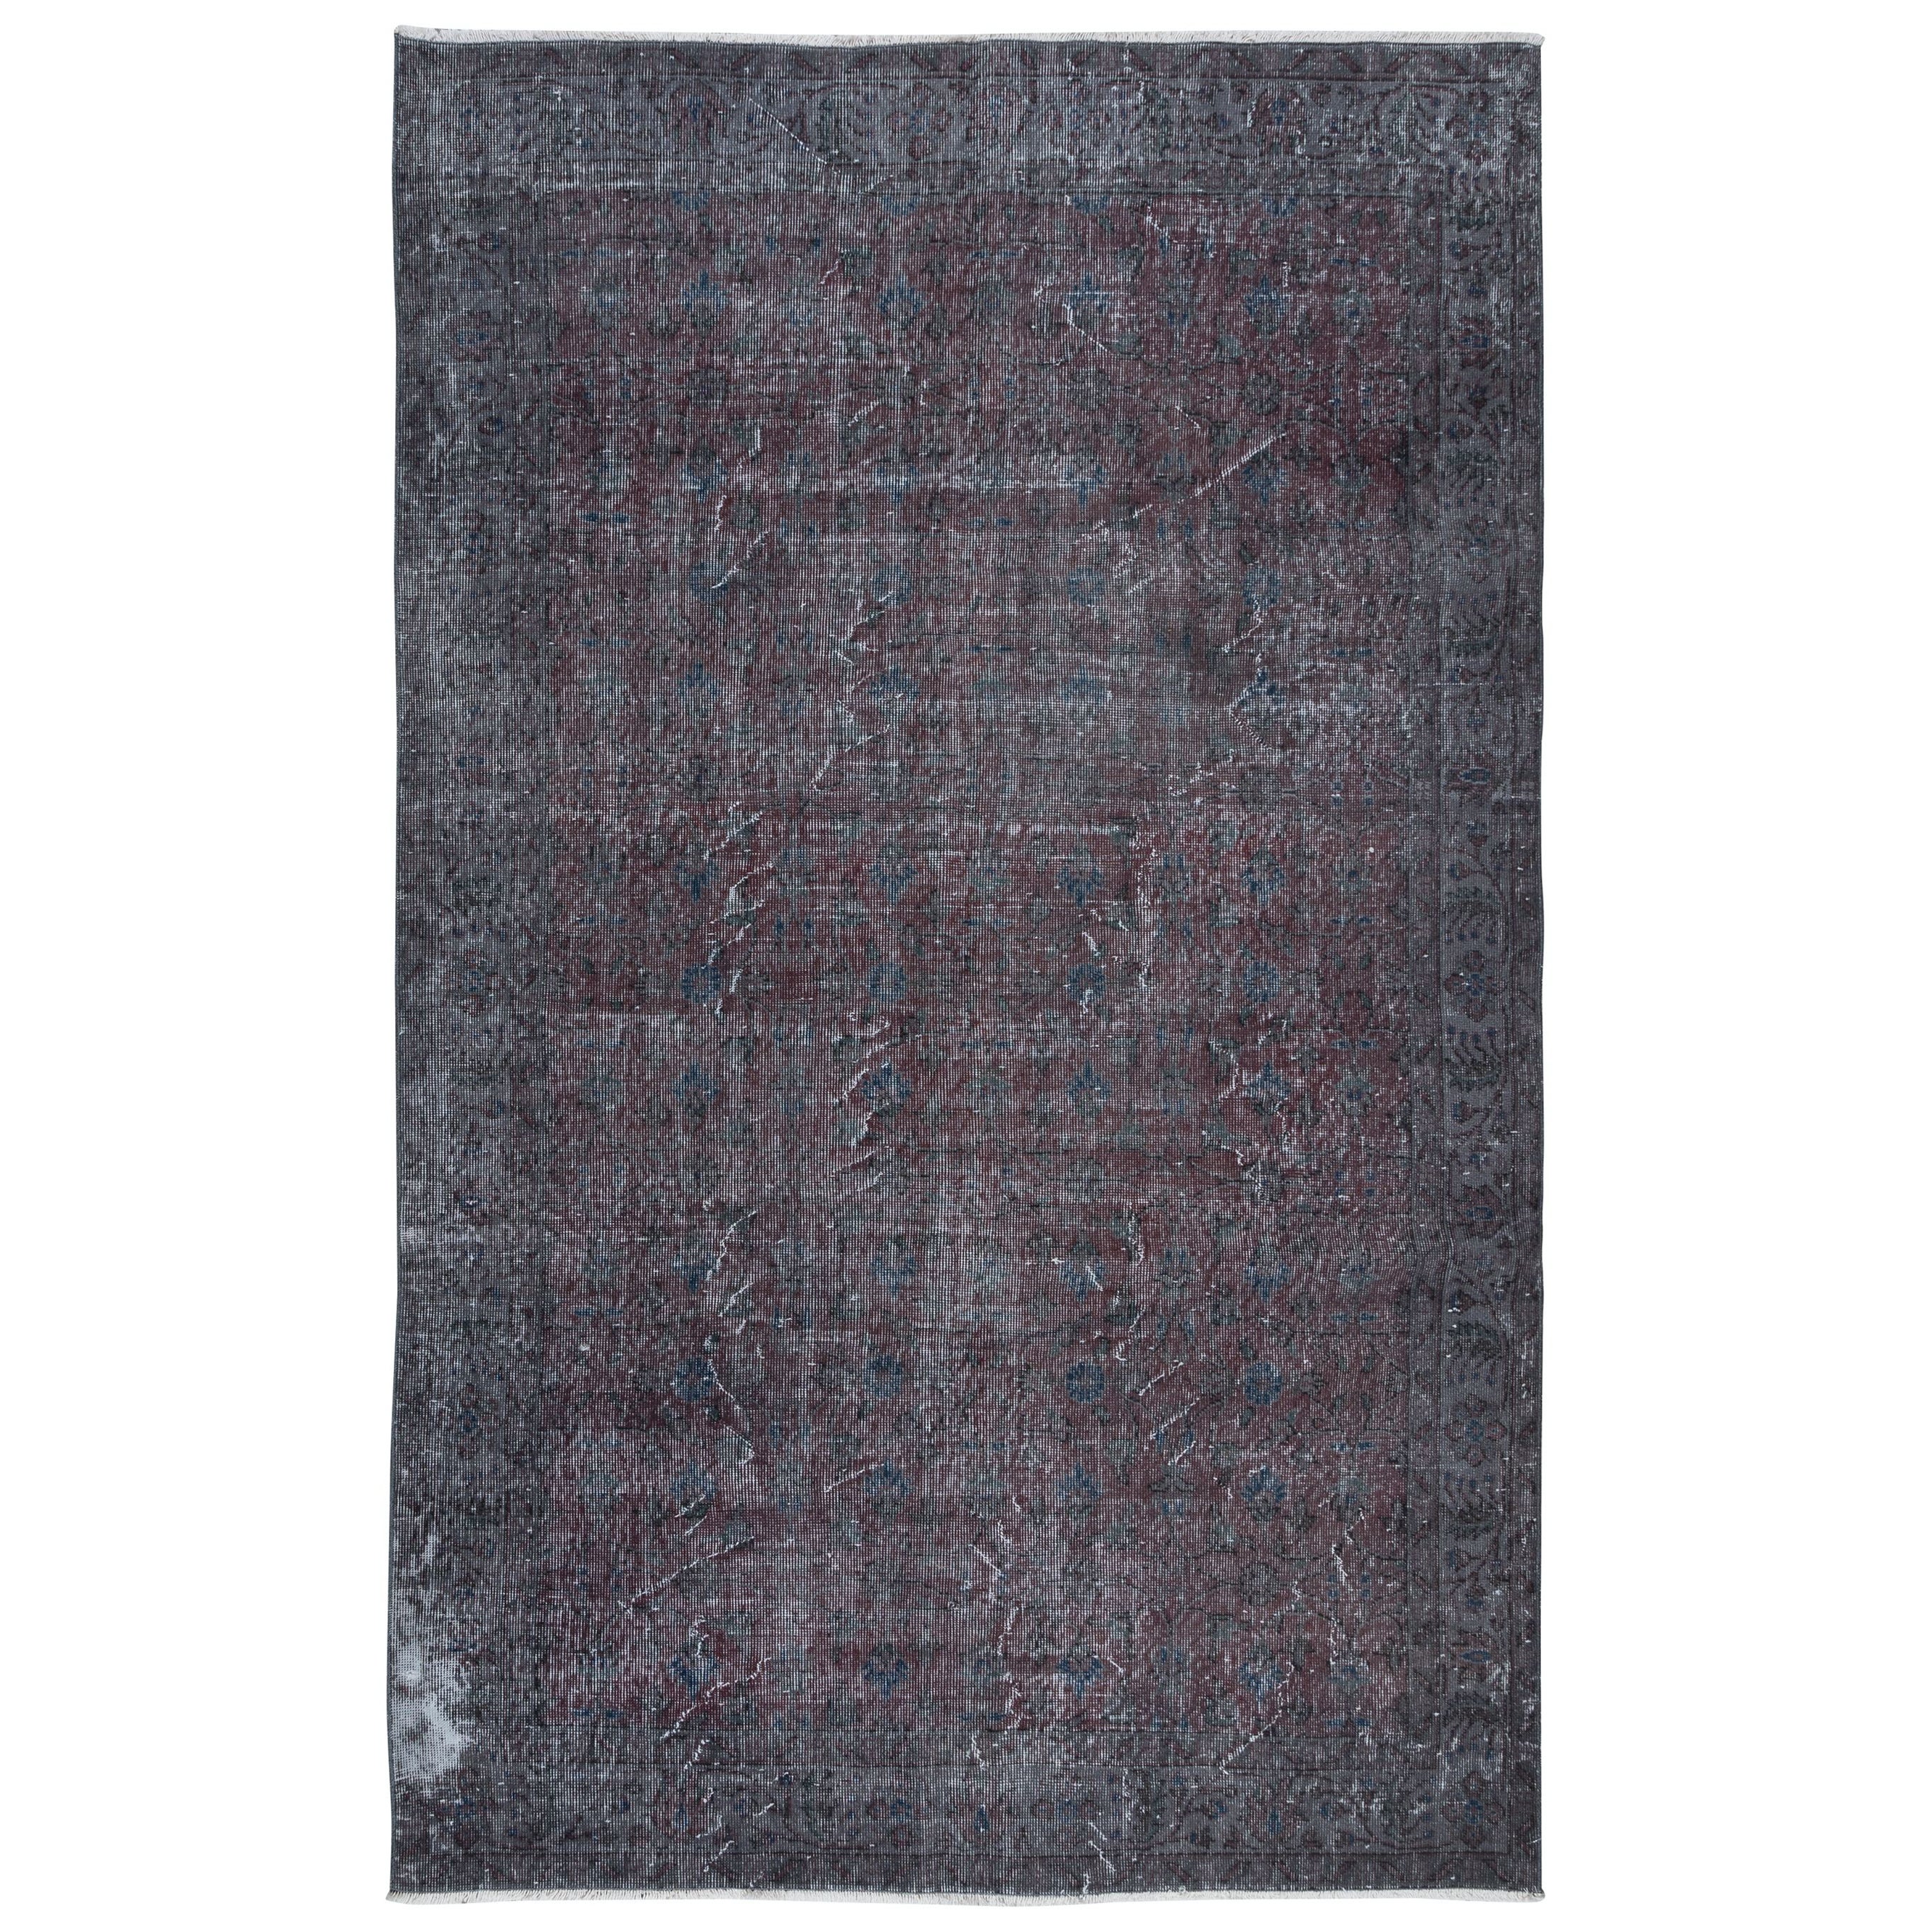 6x9.3 Ft Distressed Handmade Rug in Gray & Faded Red, Idéal pour les intérieurs modernes en vente